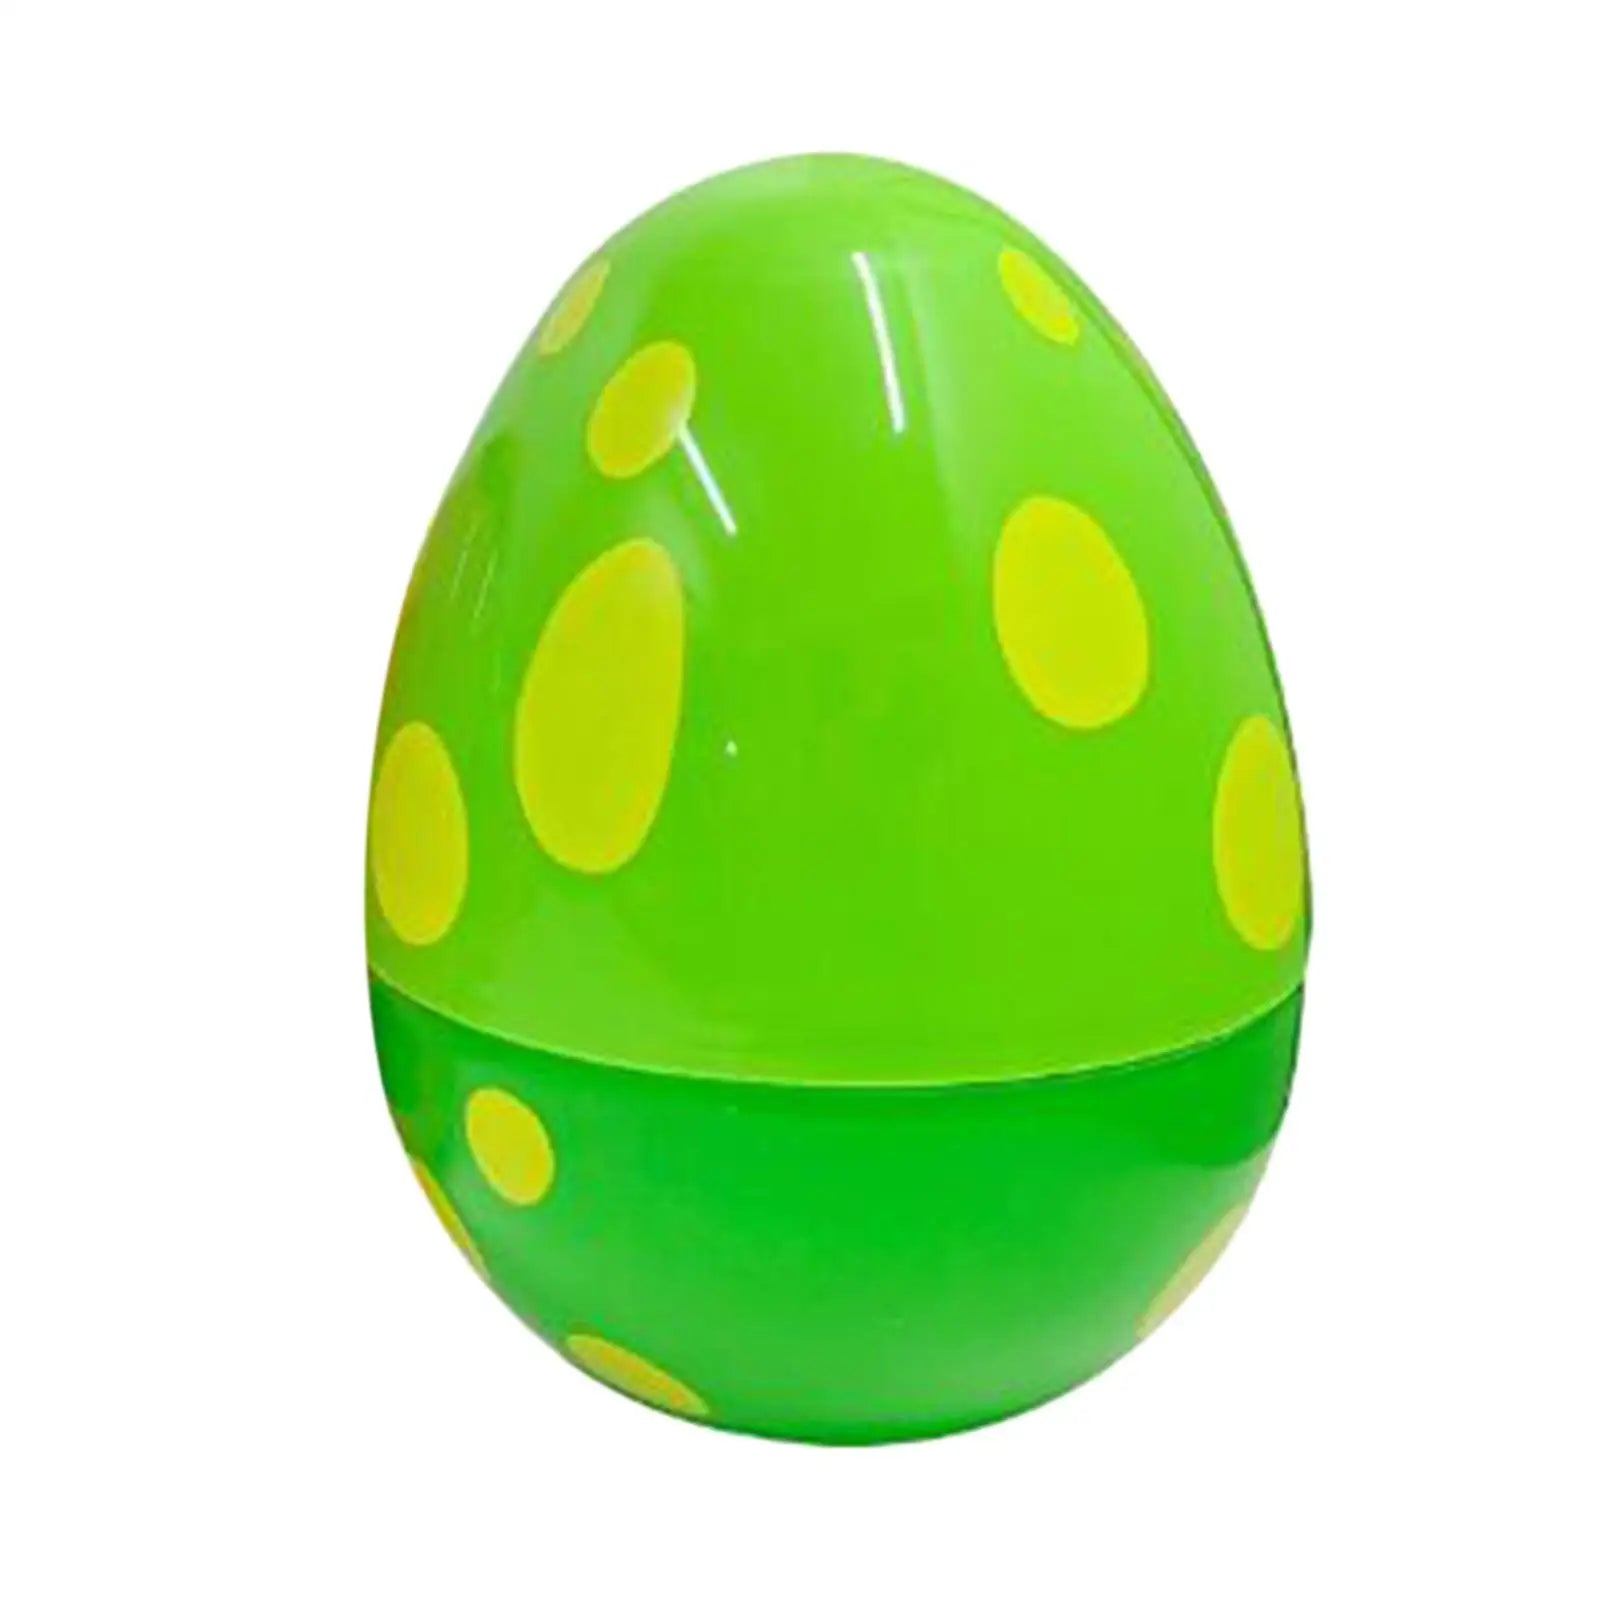 10 inch Fillable Easter Egg Giant Easter Egg for Basket Fillers Party Favors